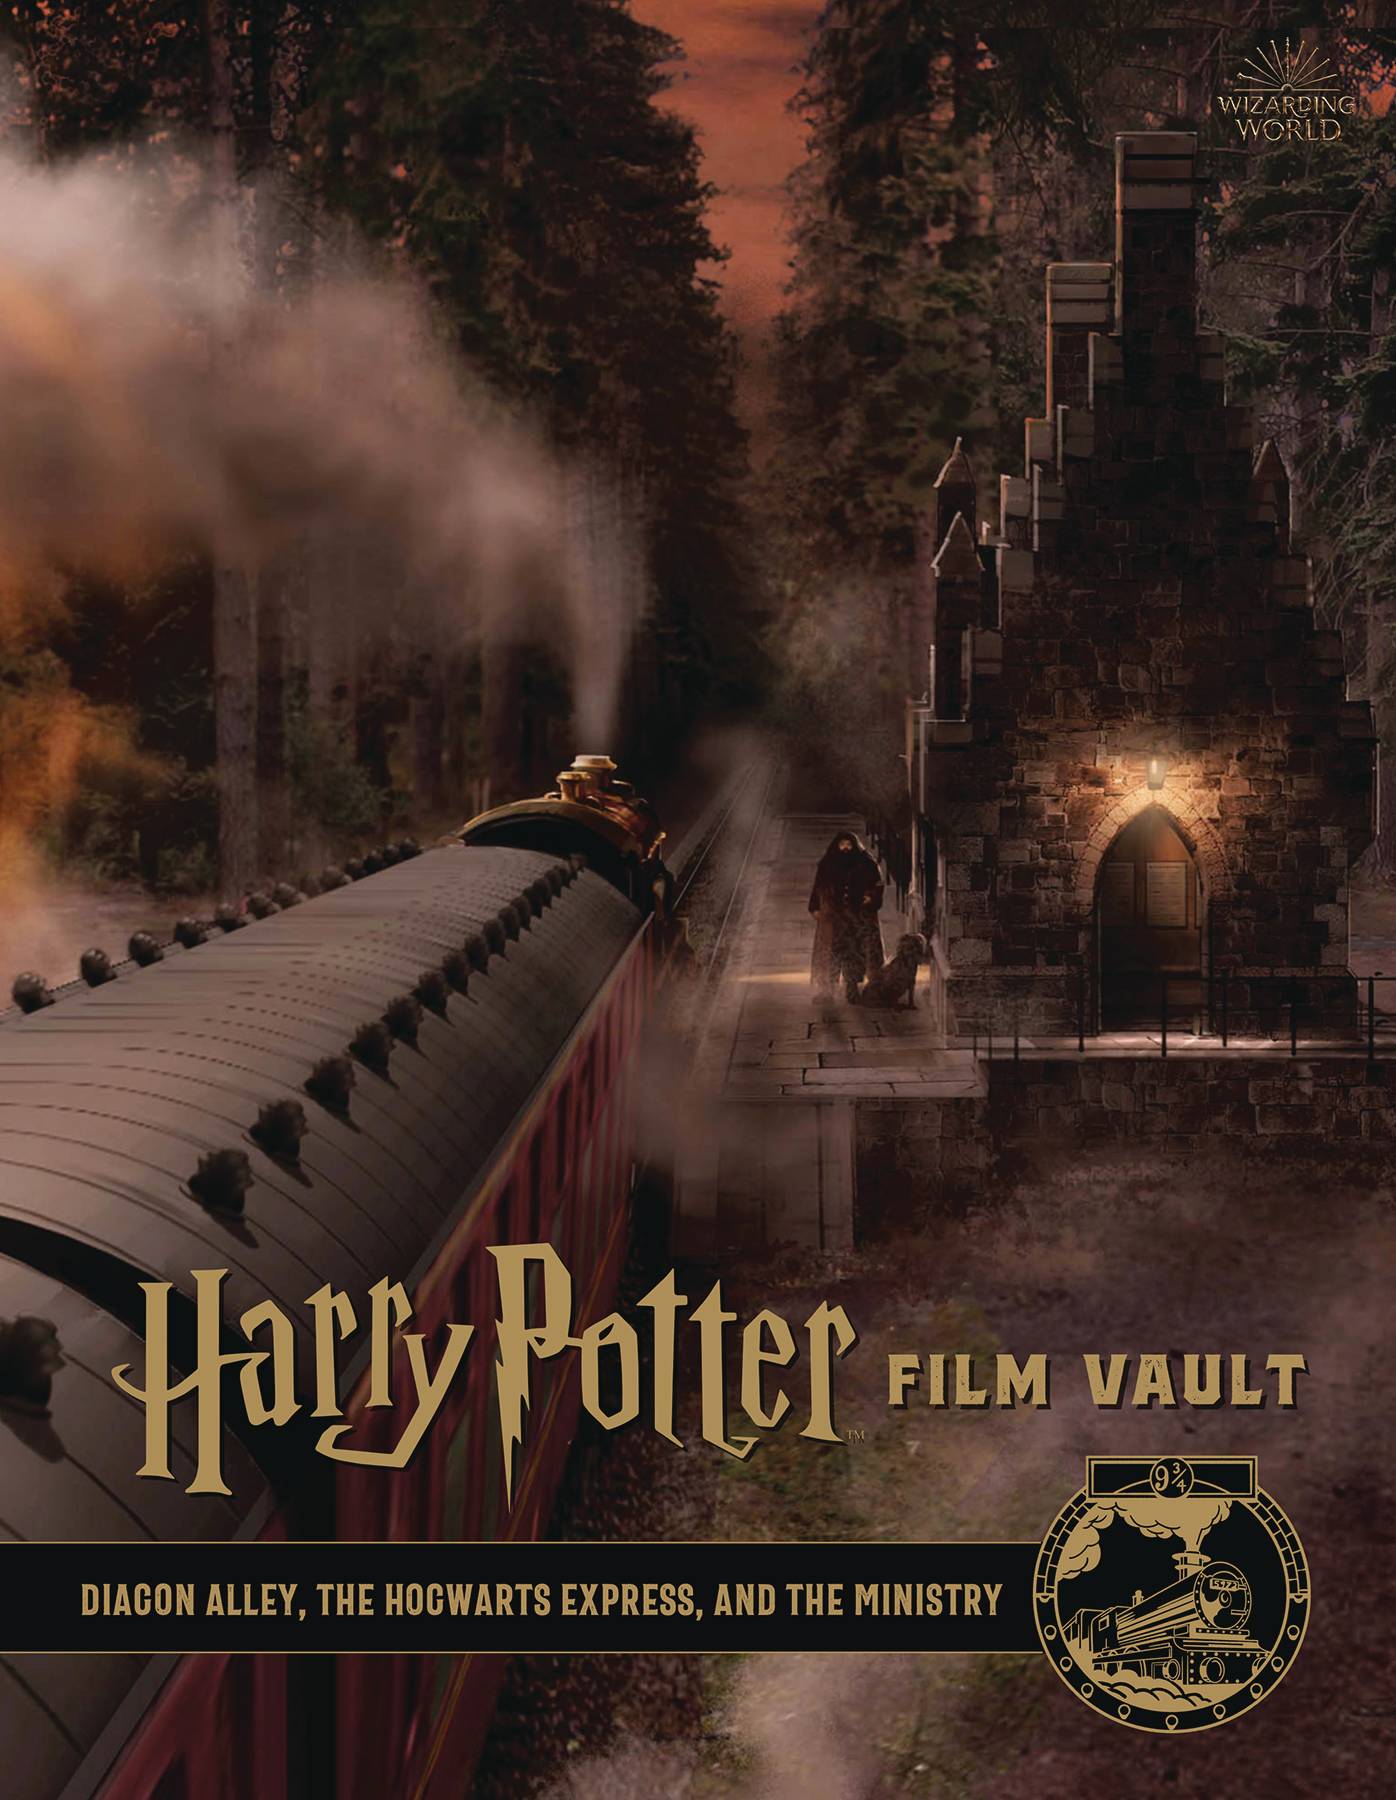 Harry Potter Film Vault Hardcover Volume 2